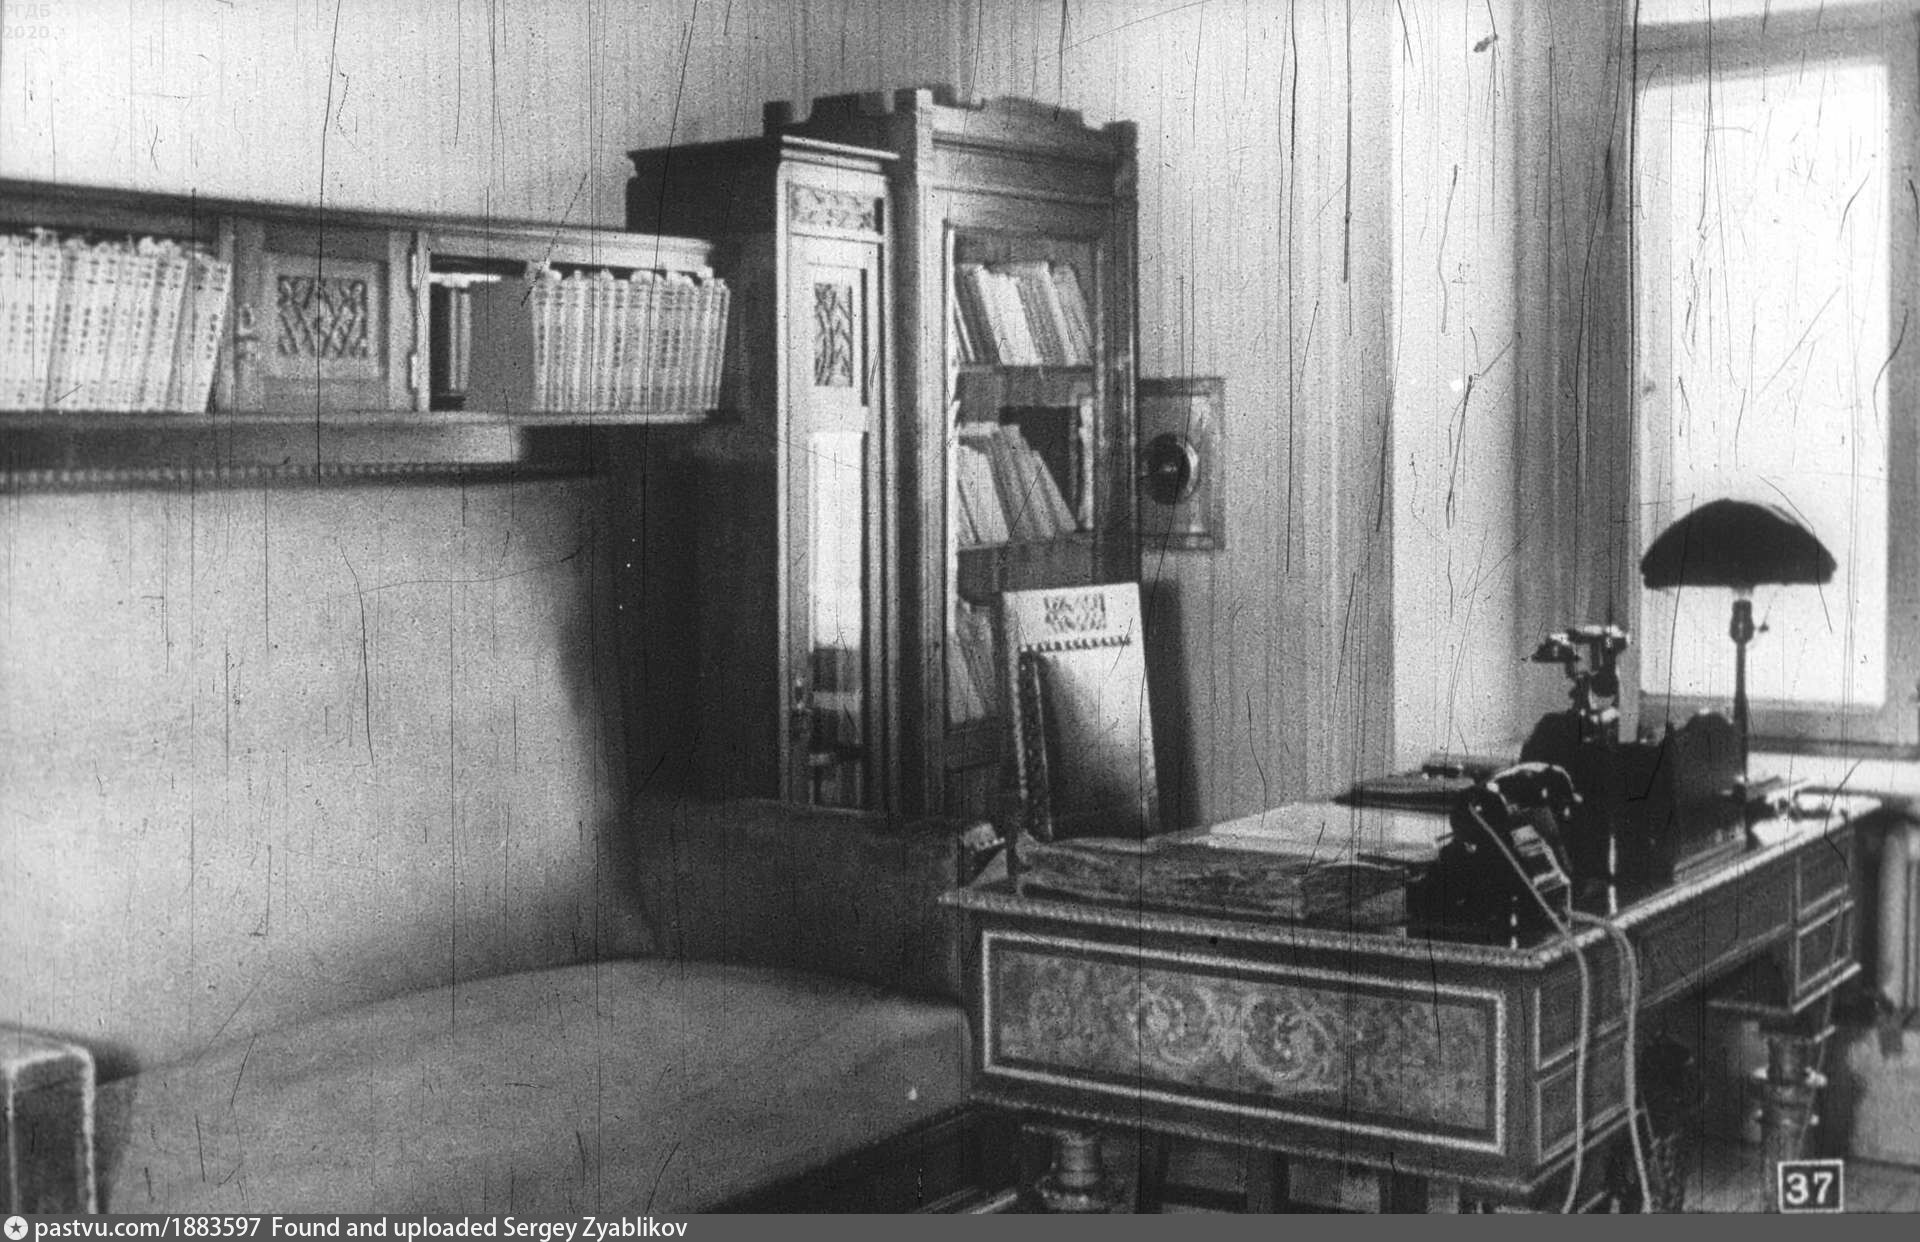 Н б комната. Квартира Ленина в Кремле. Призрак Сталина в Кремле фото. Телефонная комната в Кремле.у Ленина фото. Призрак Сталин стоит на Кремле.